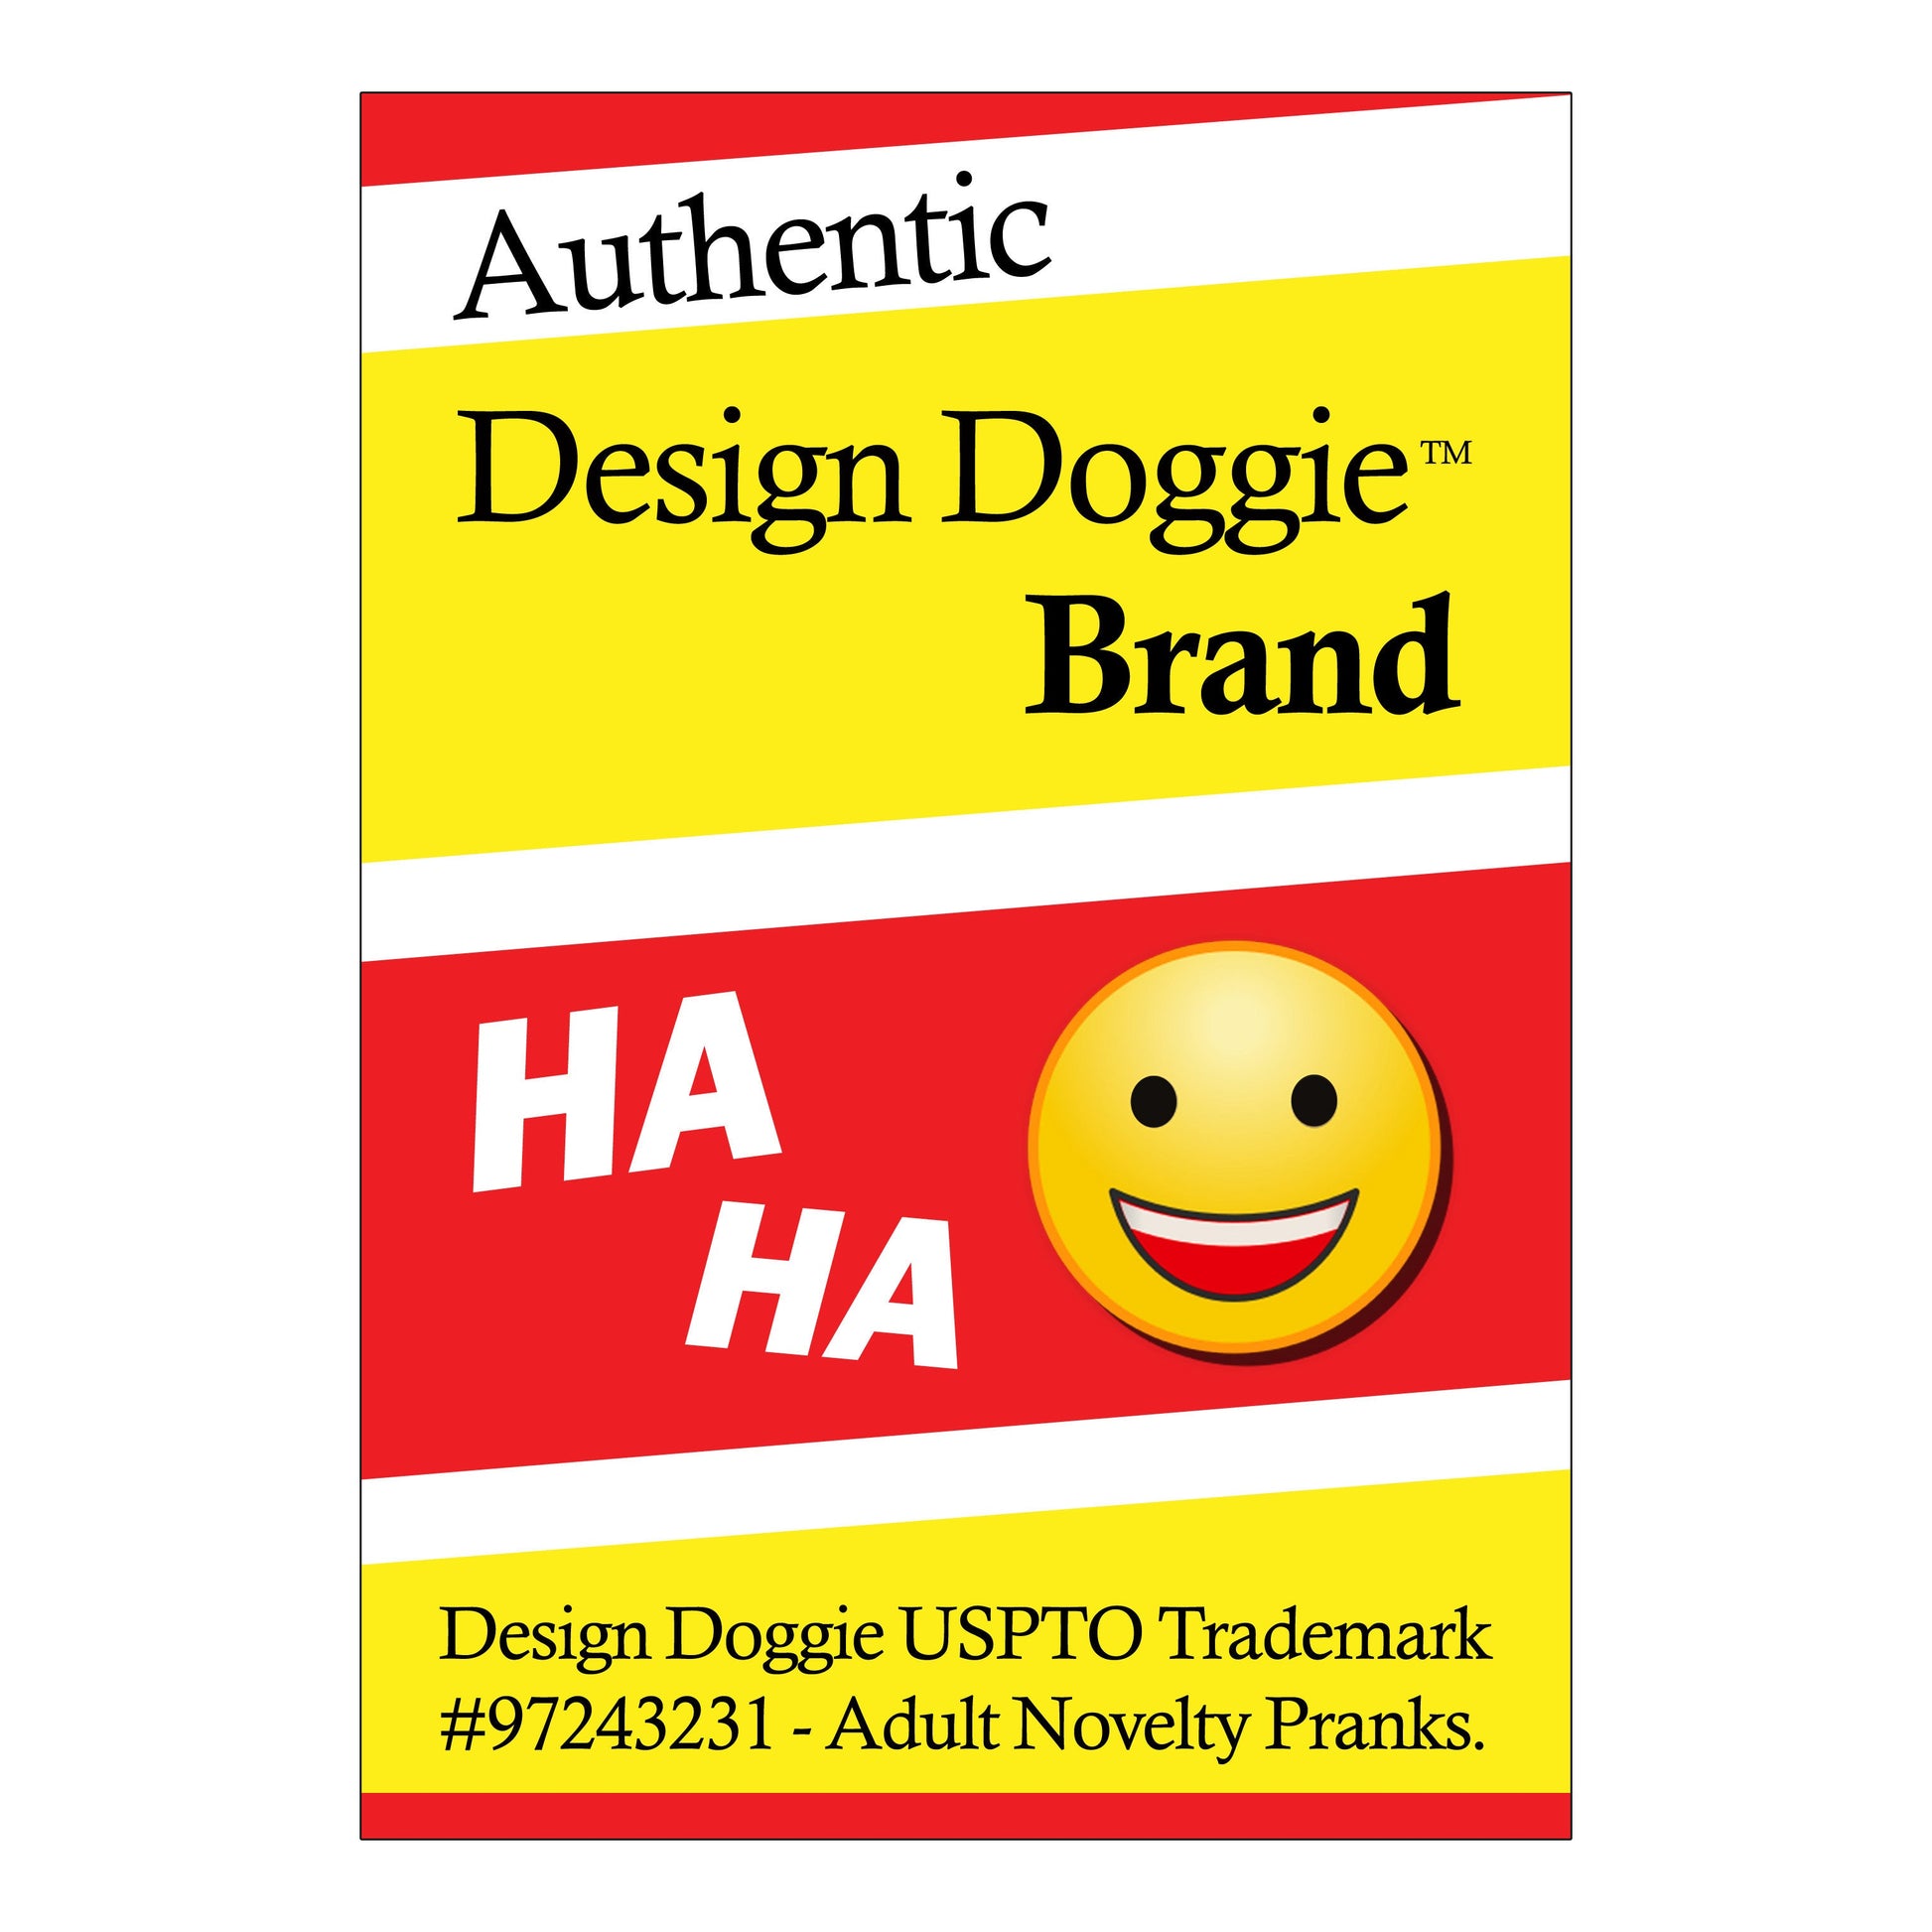 Design Doggie Brand